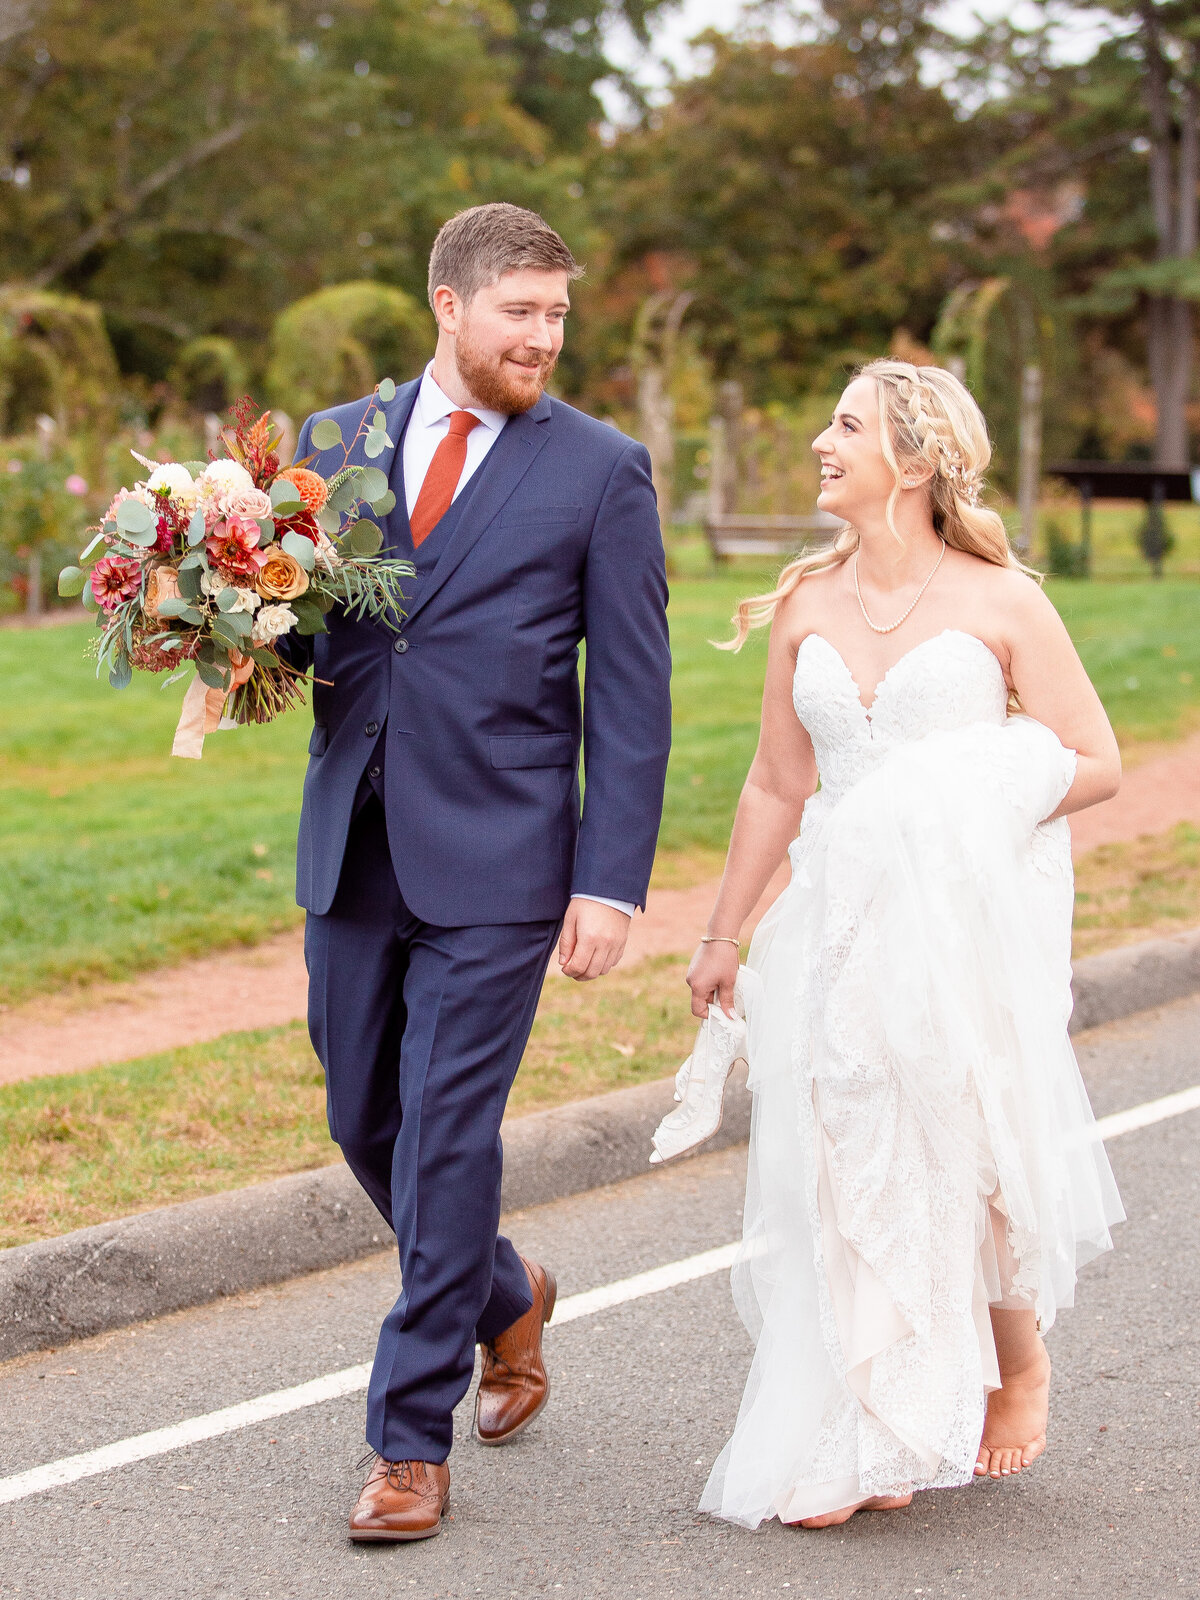 barefoot-bride-groom-holds-bouquet